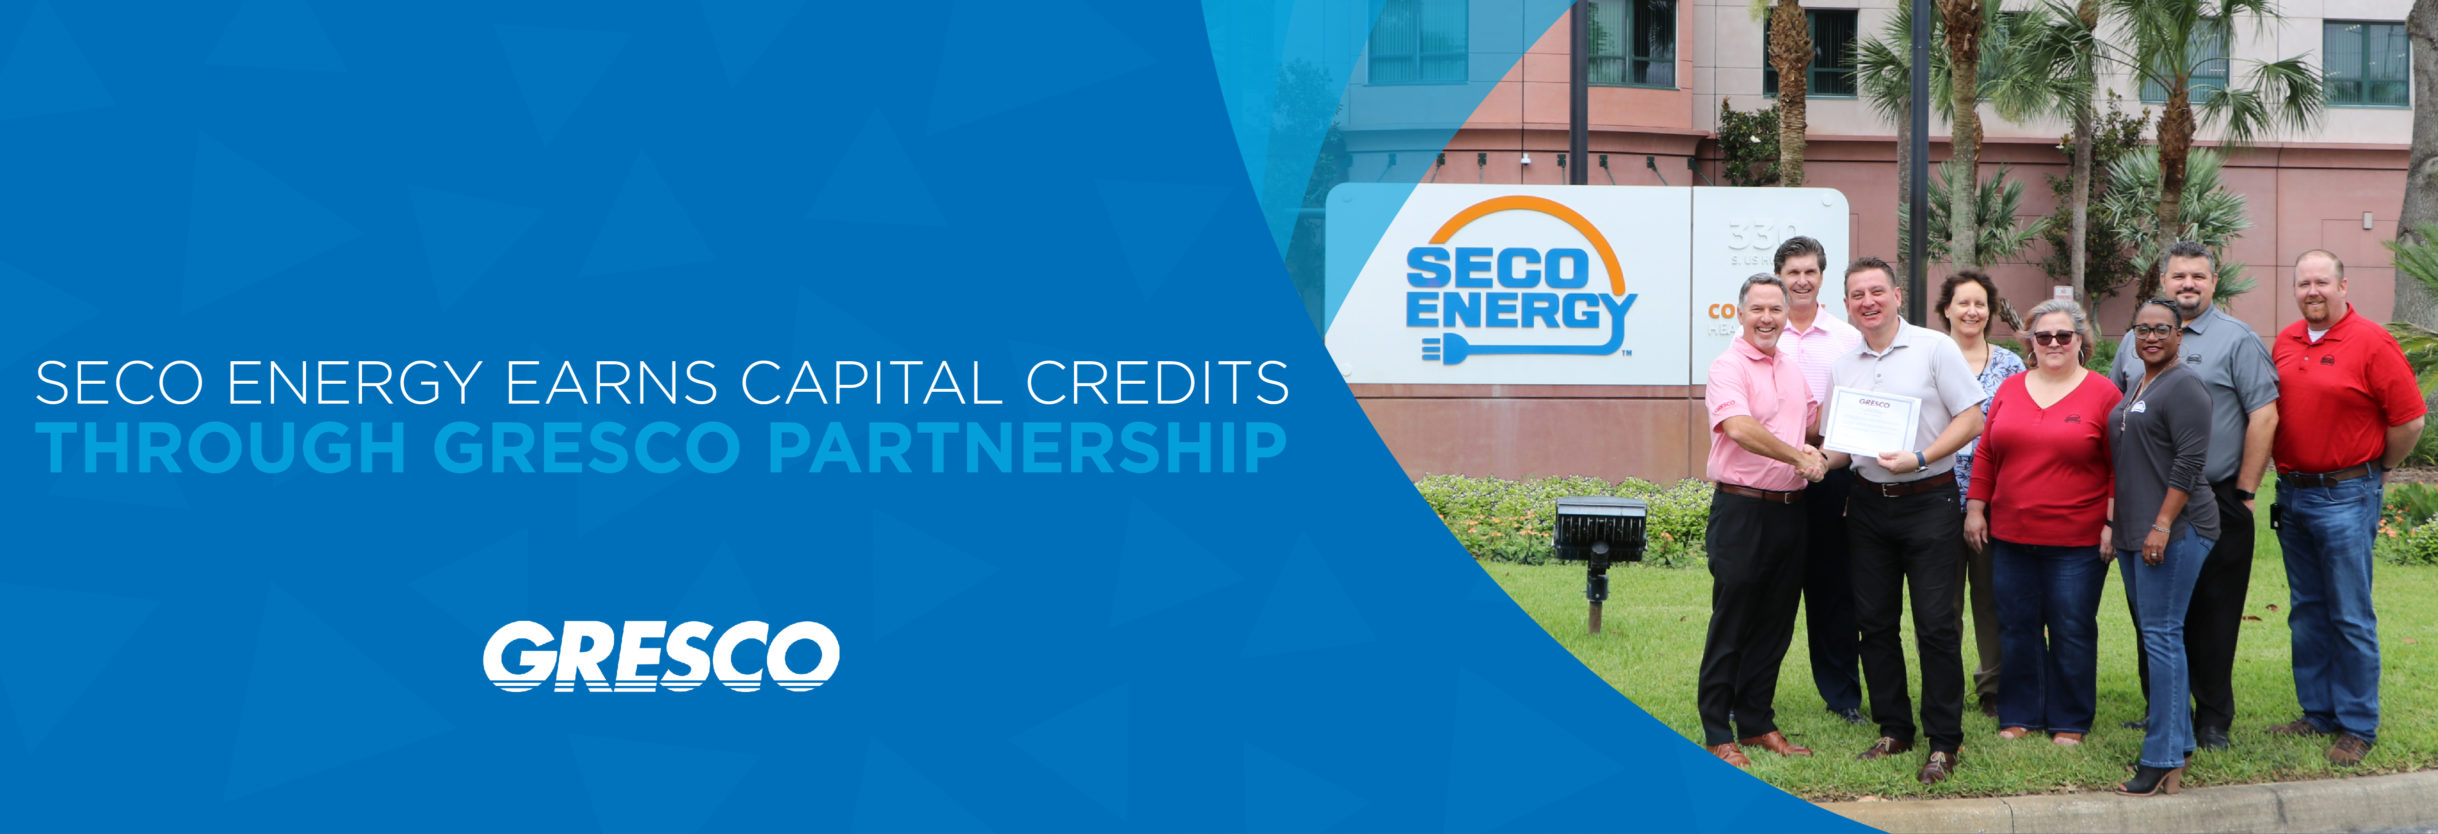 SECO Energy Earns Capital Credits Through Gresco Partnership